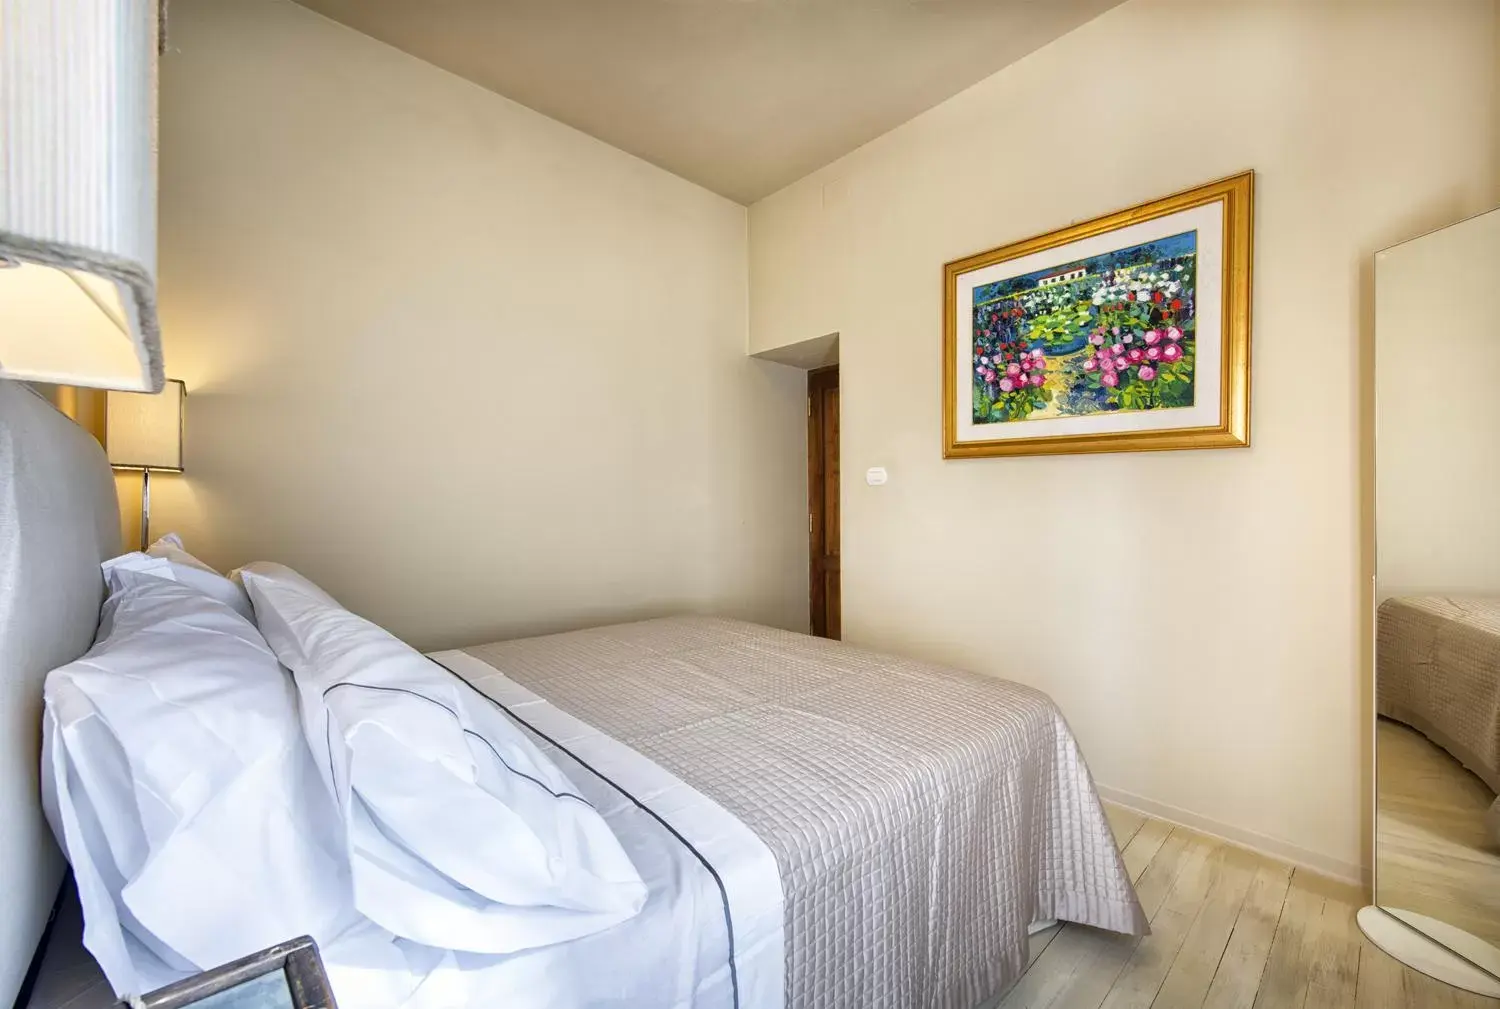 Bedroom, Room Photo in Drogheria e Locanda Franci